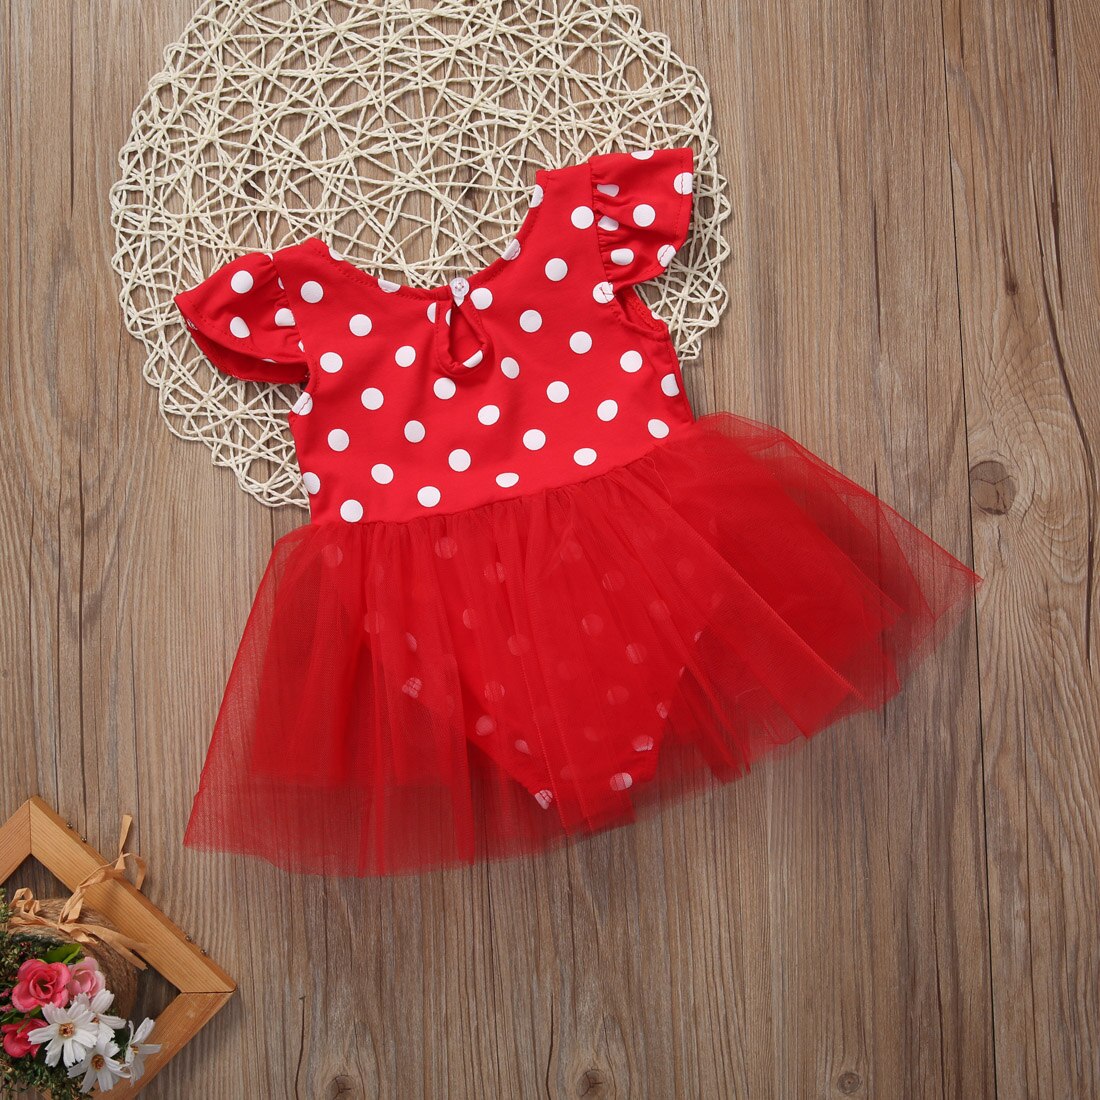 Lovely Toddler Baby Girls Tulle Tutu Dress Kids Red Dot Party Dresses cute  bodysuit  New - ebowsos